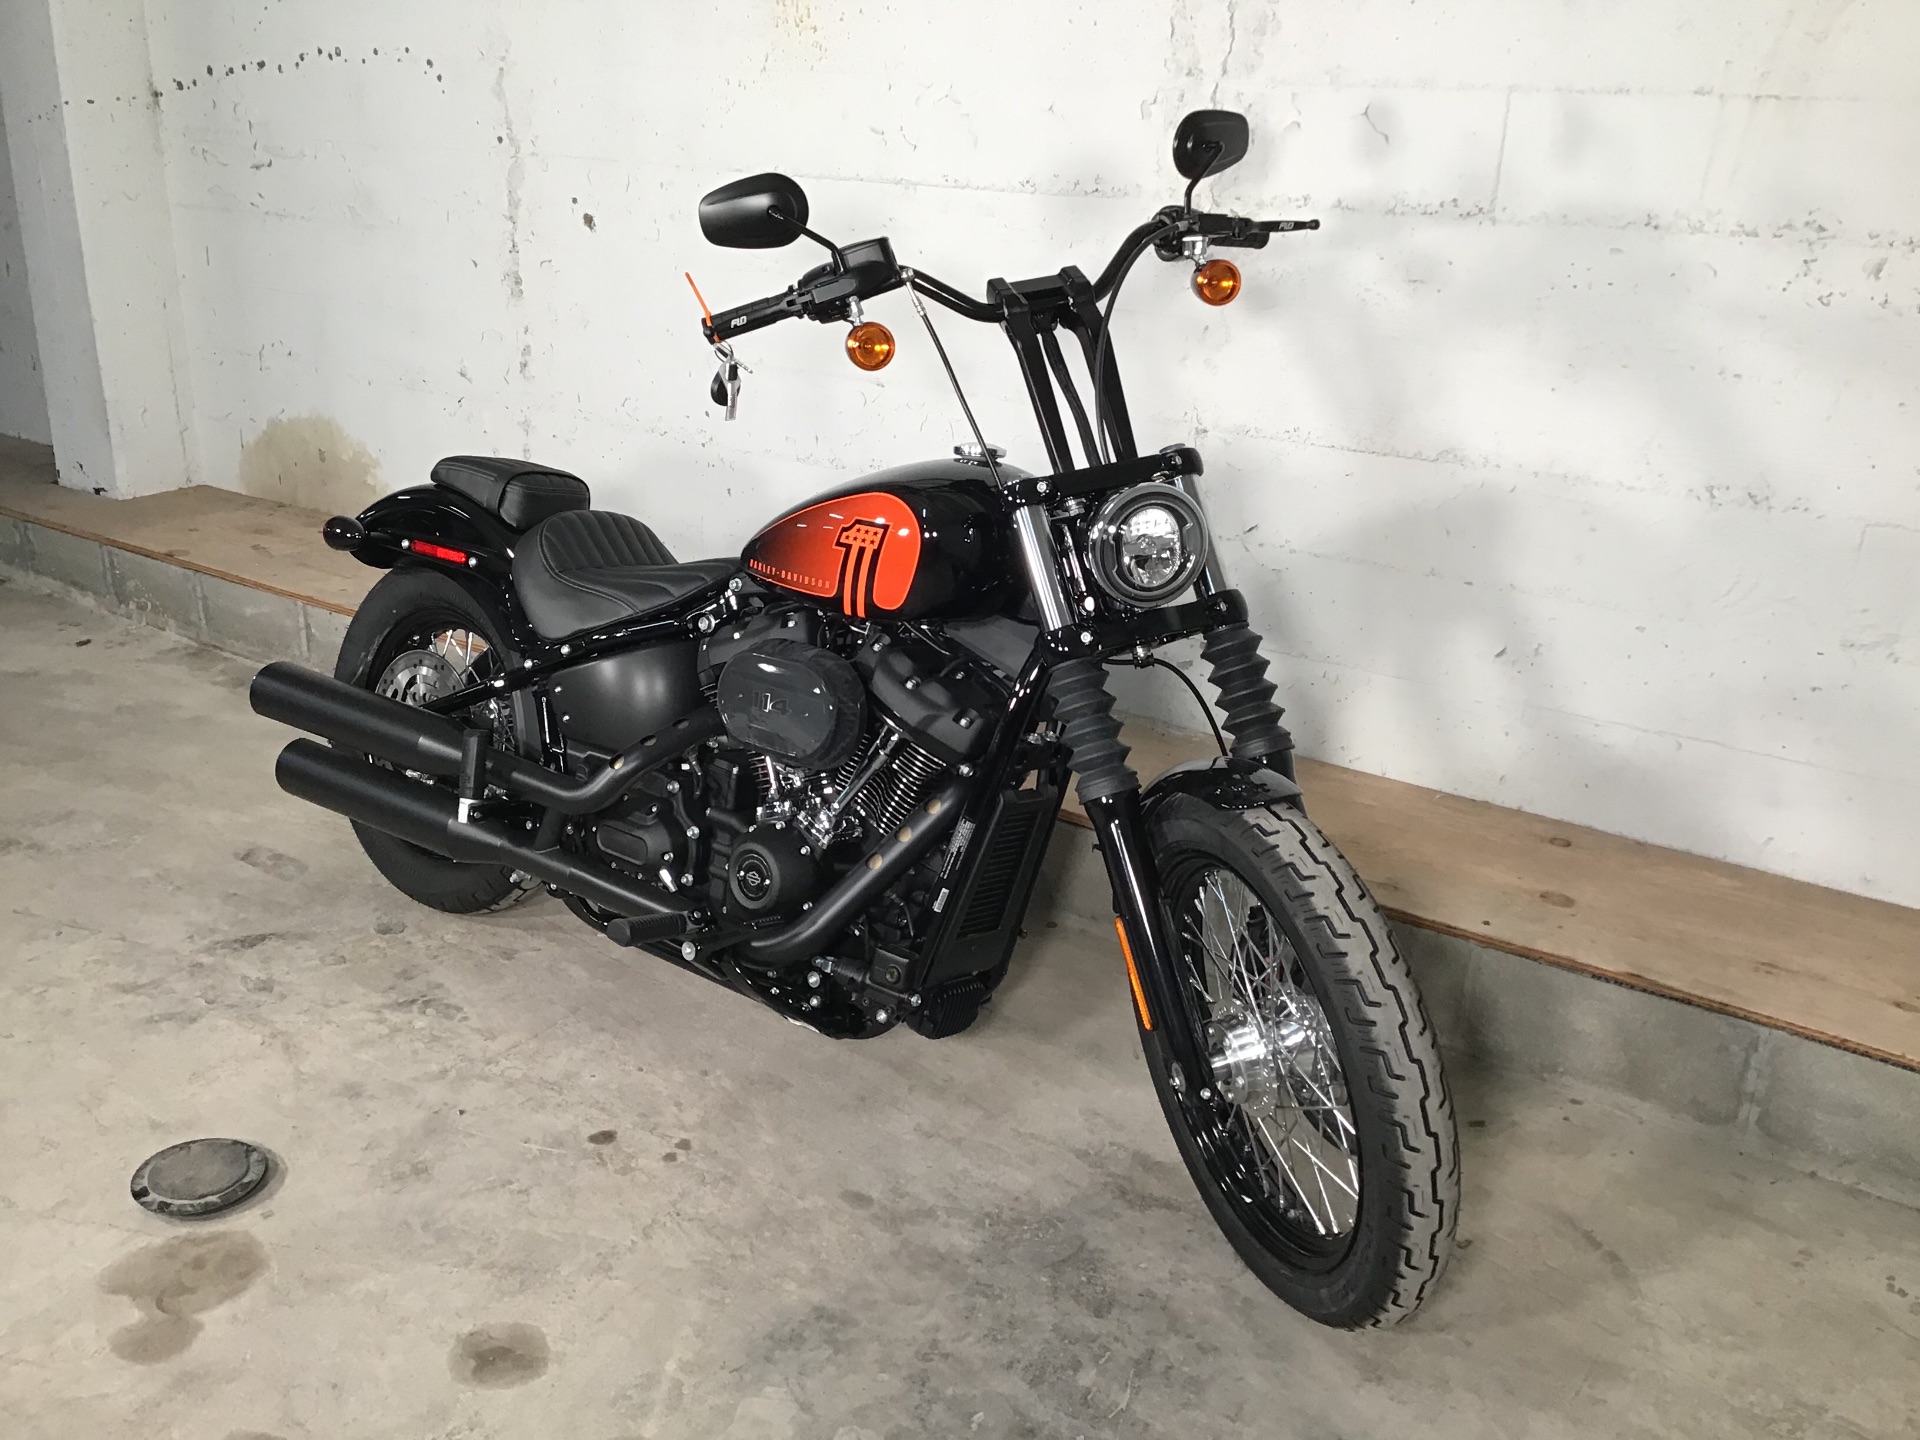 New 2021 Harley Davidson Street Bob 114 Vivid Black Motorcycles In San Francisco Ca N062238